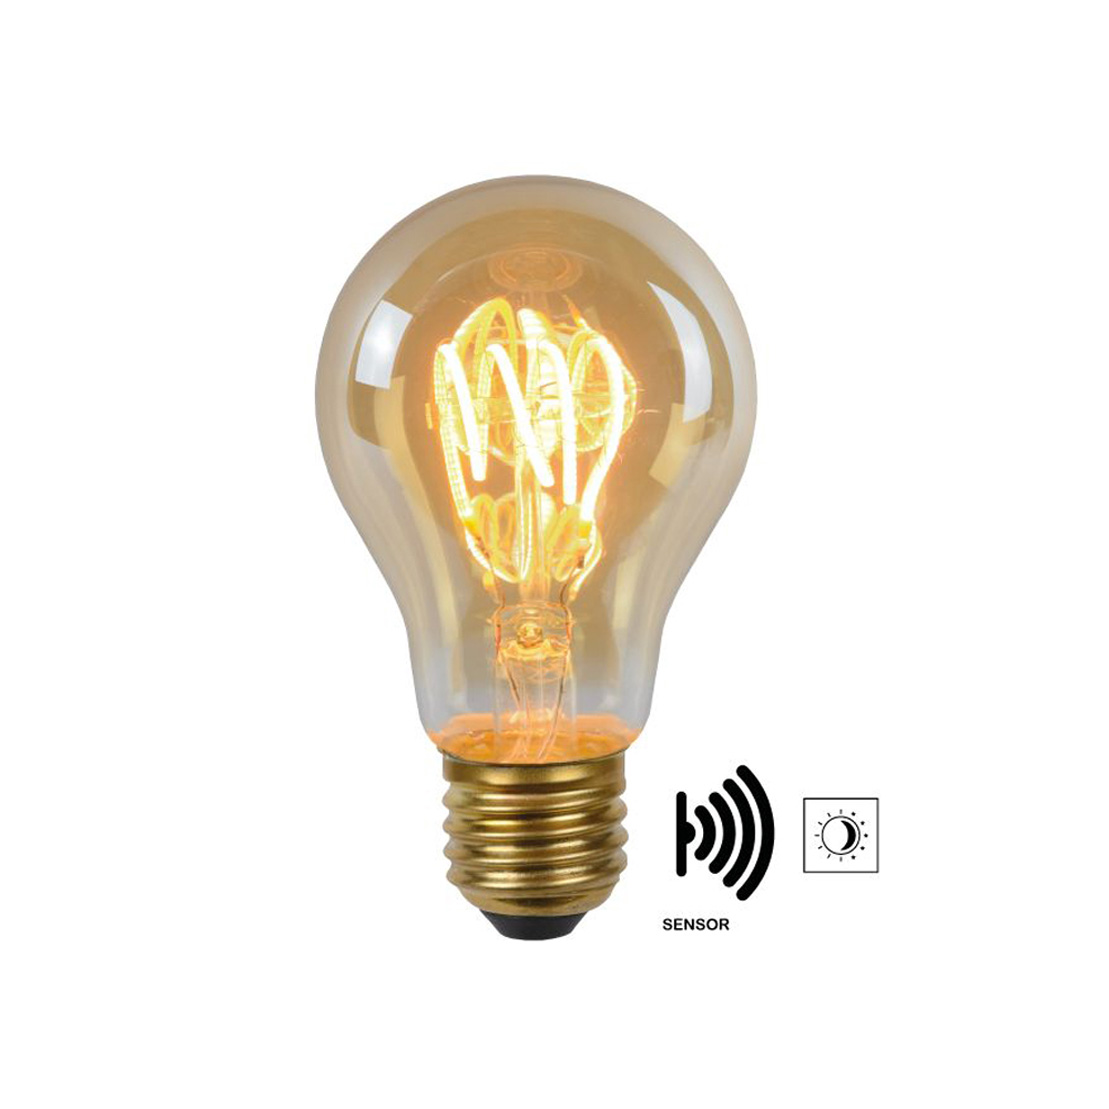 Lucide LED BULB TWILIGHT SENSOR -UlkoFilamentBulb - Ø 4 cm - LED - E27 - 1x4W 2200K - Amber